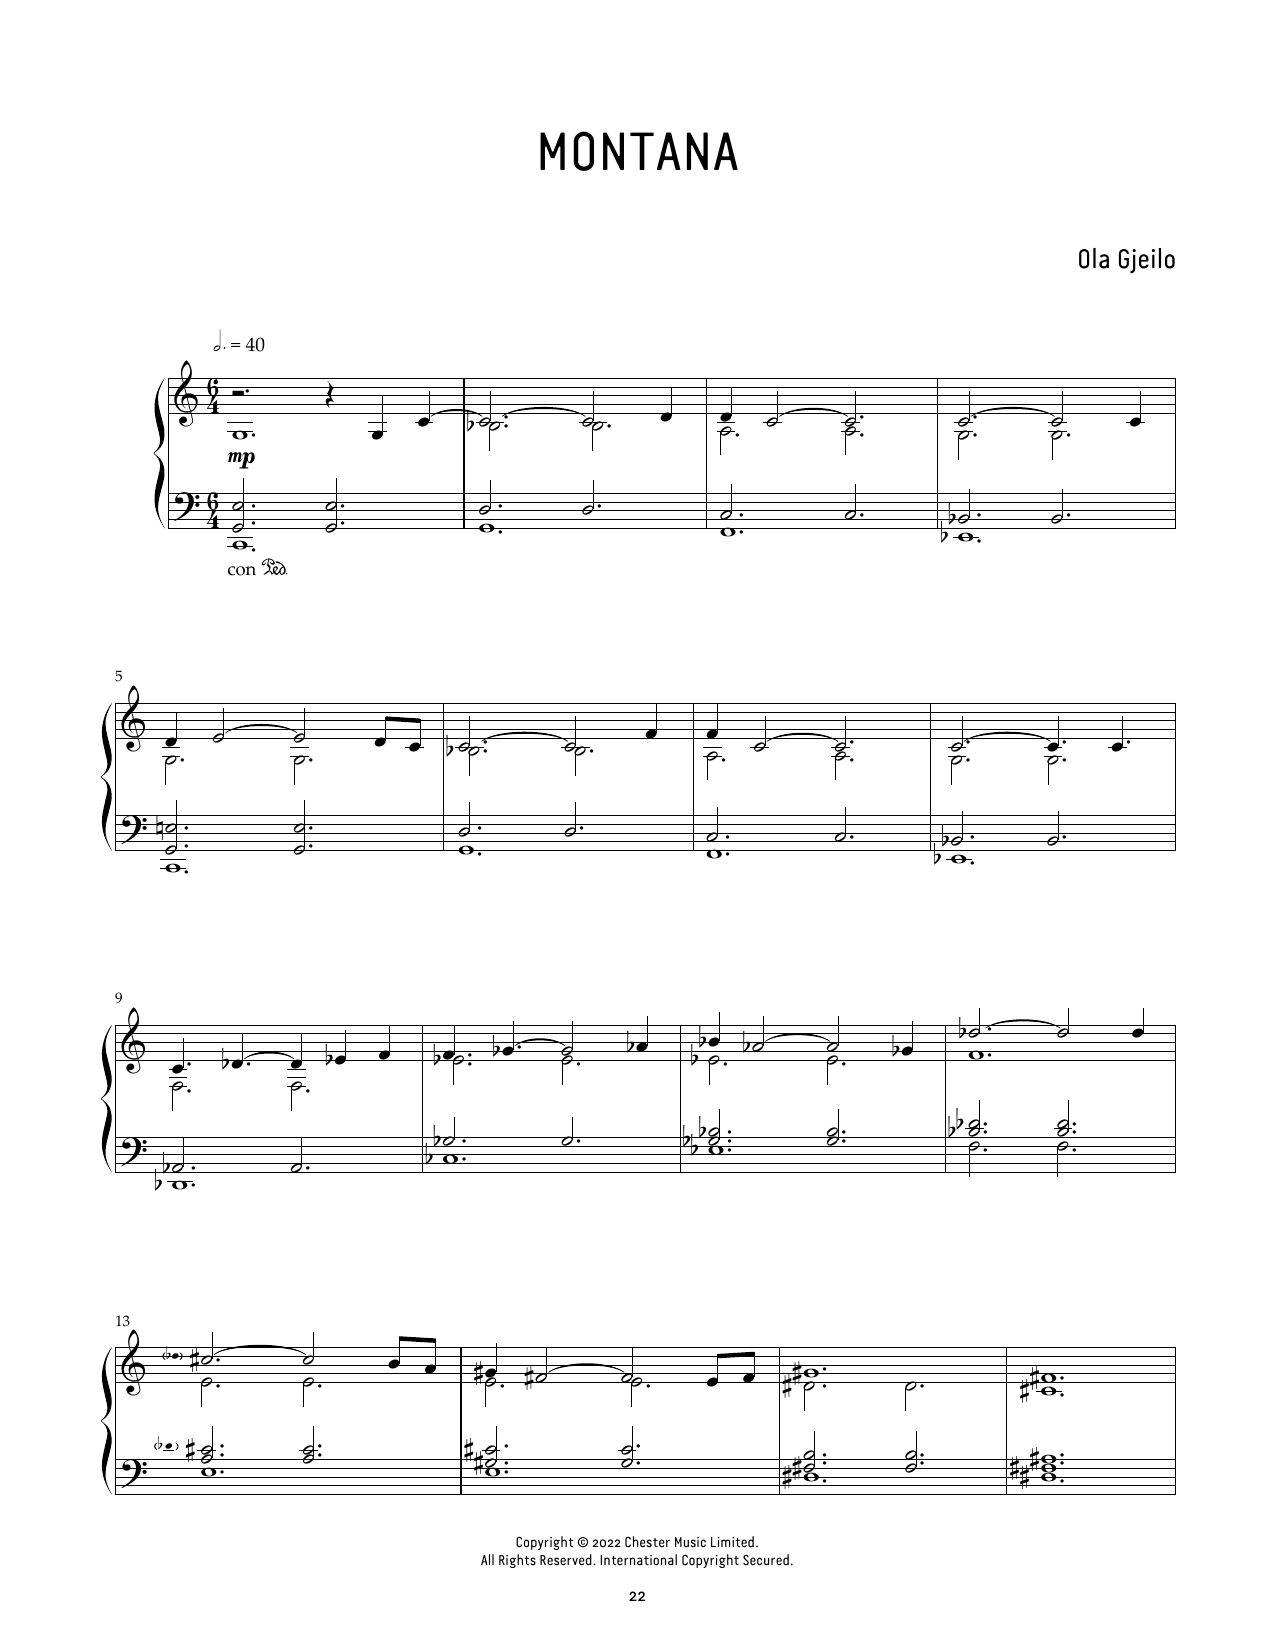 Ola Gjeilo Montana sheet music notes and chords arranged for Piano Solo